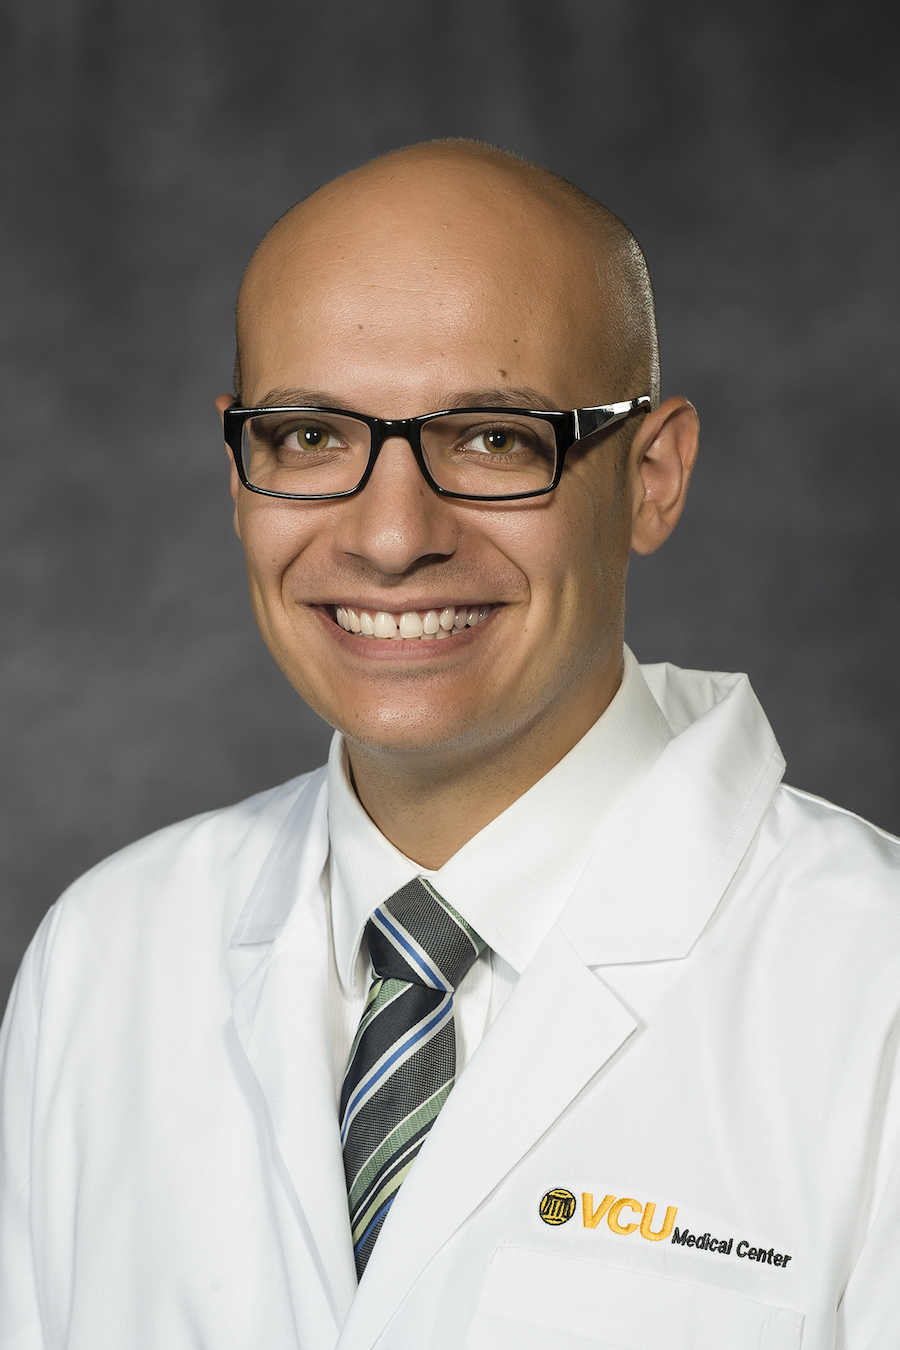 Dr. Amir Louka